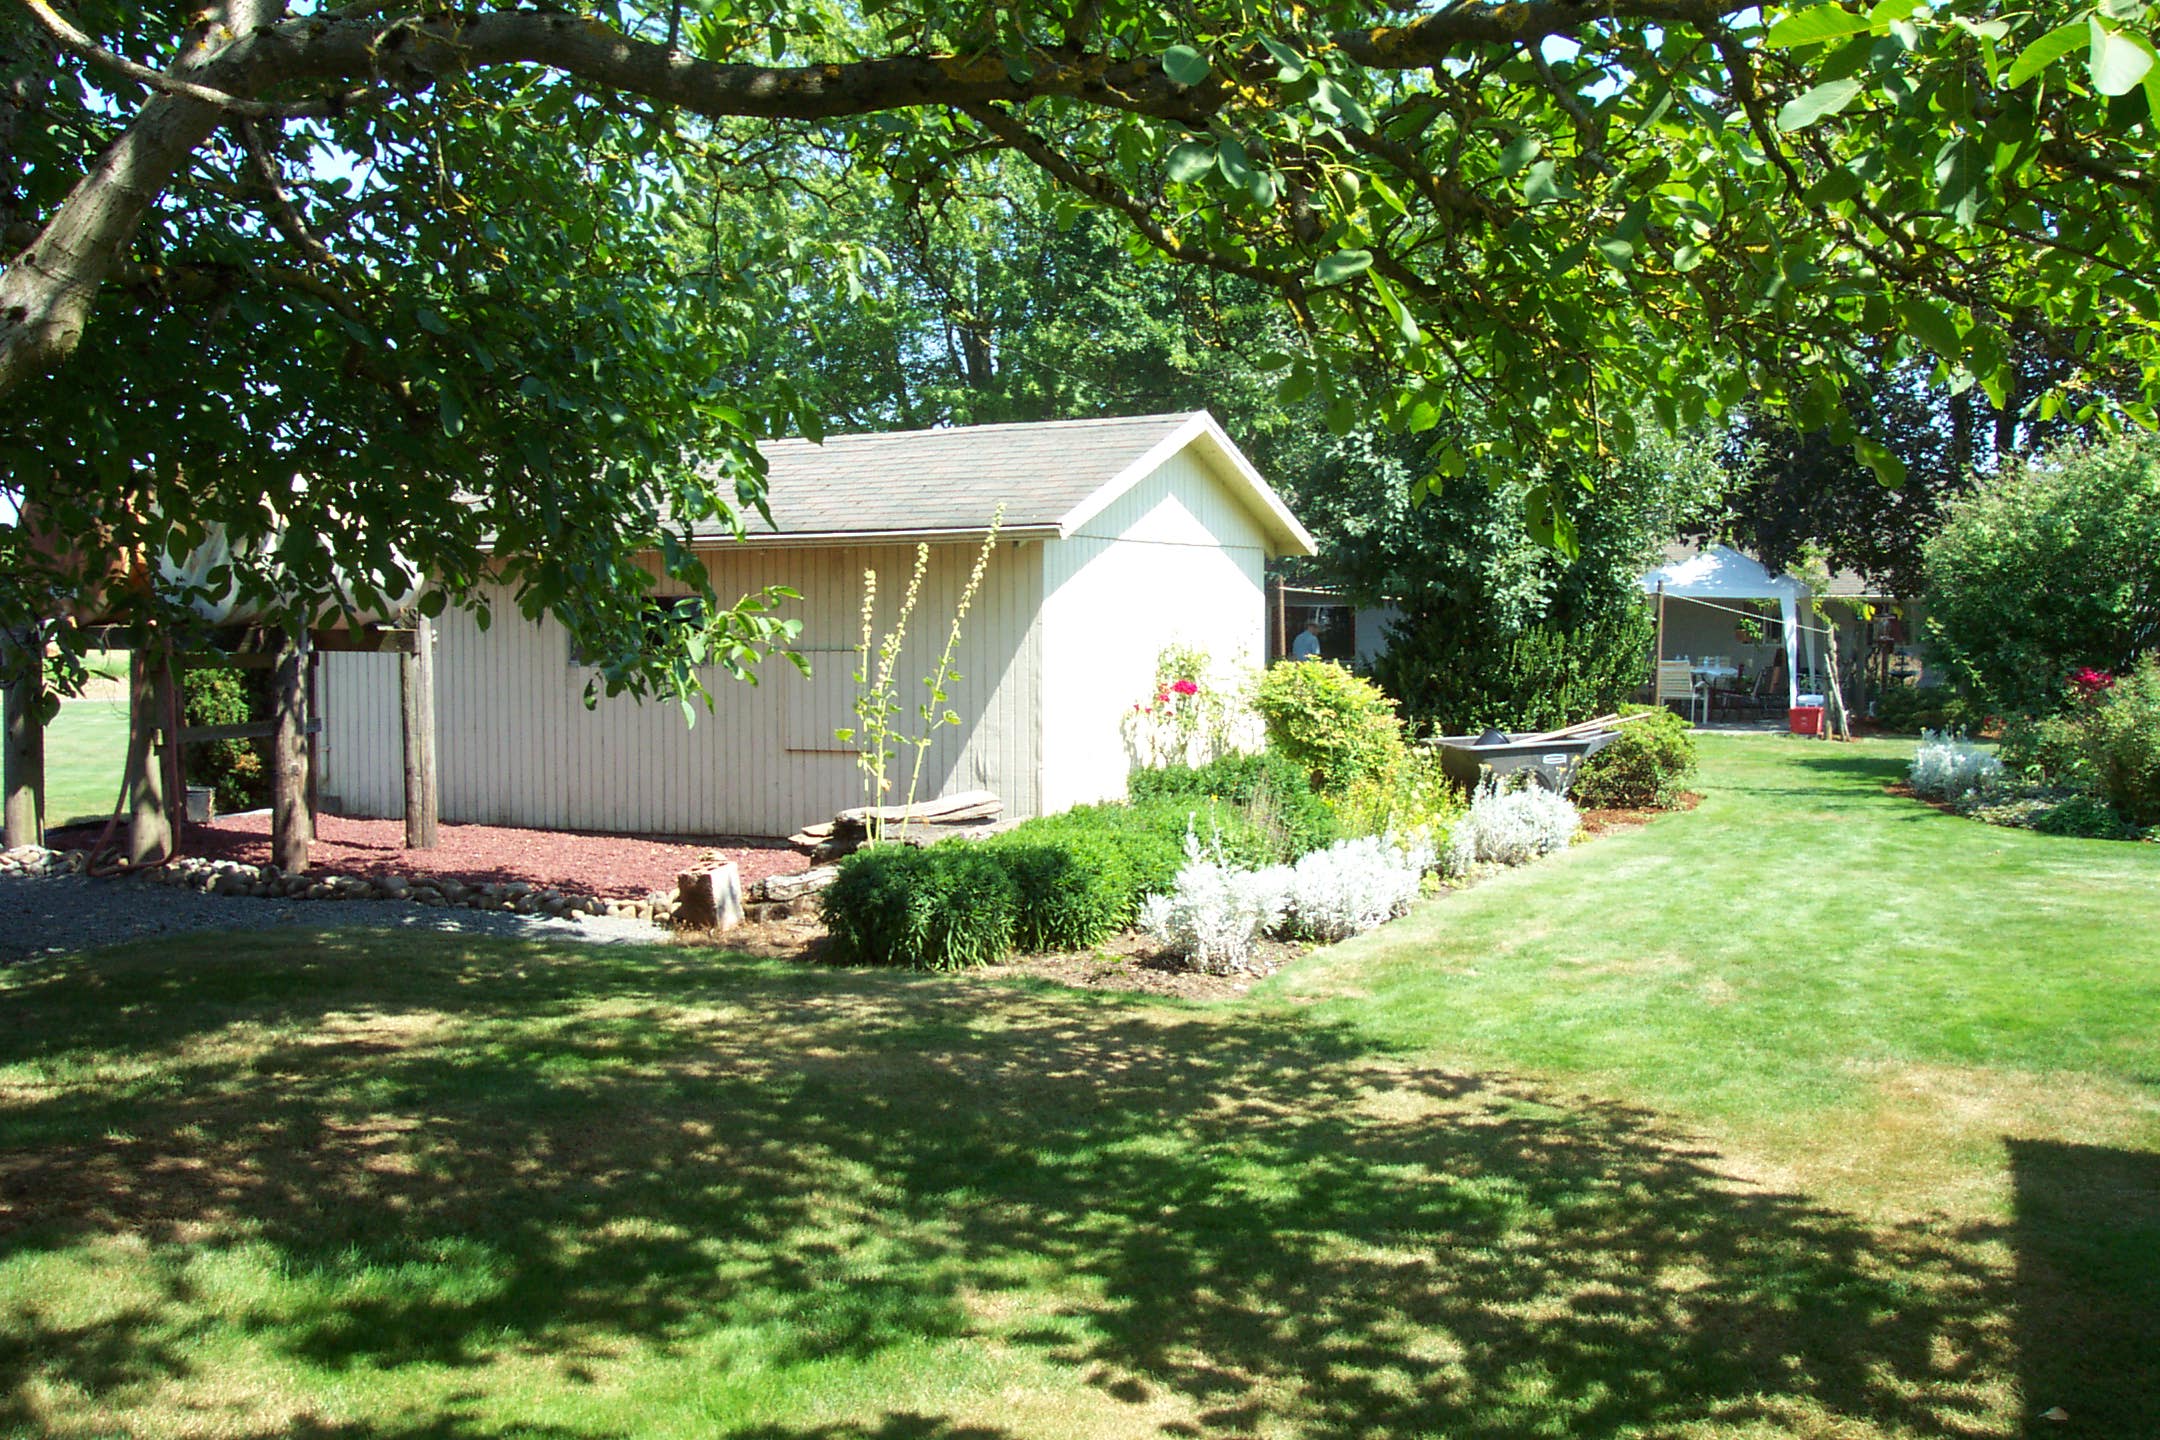 August 16, 2008, yard of Joe and Fran's home.